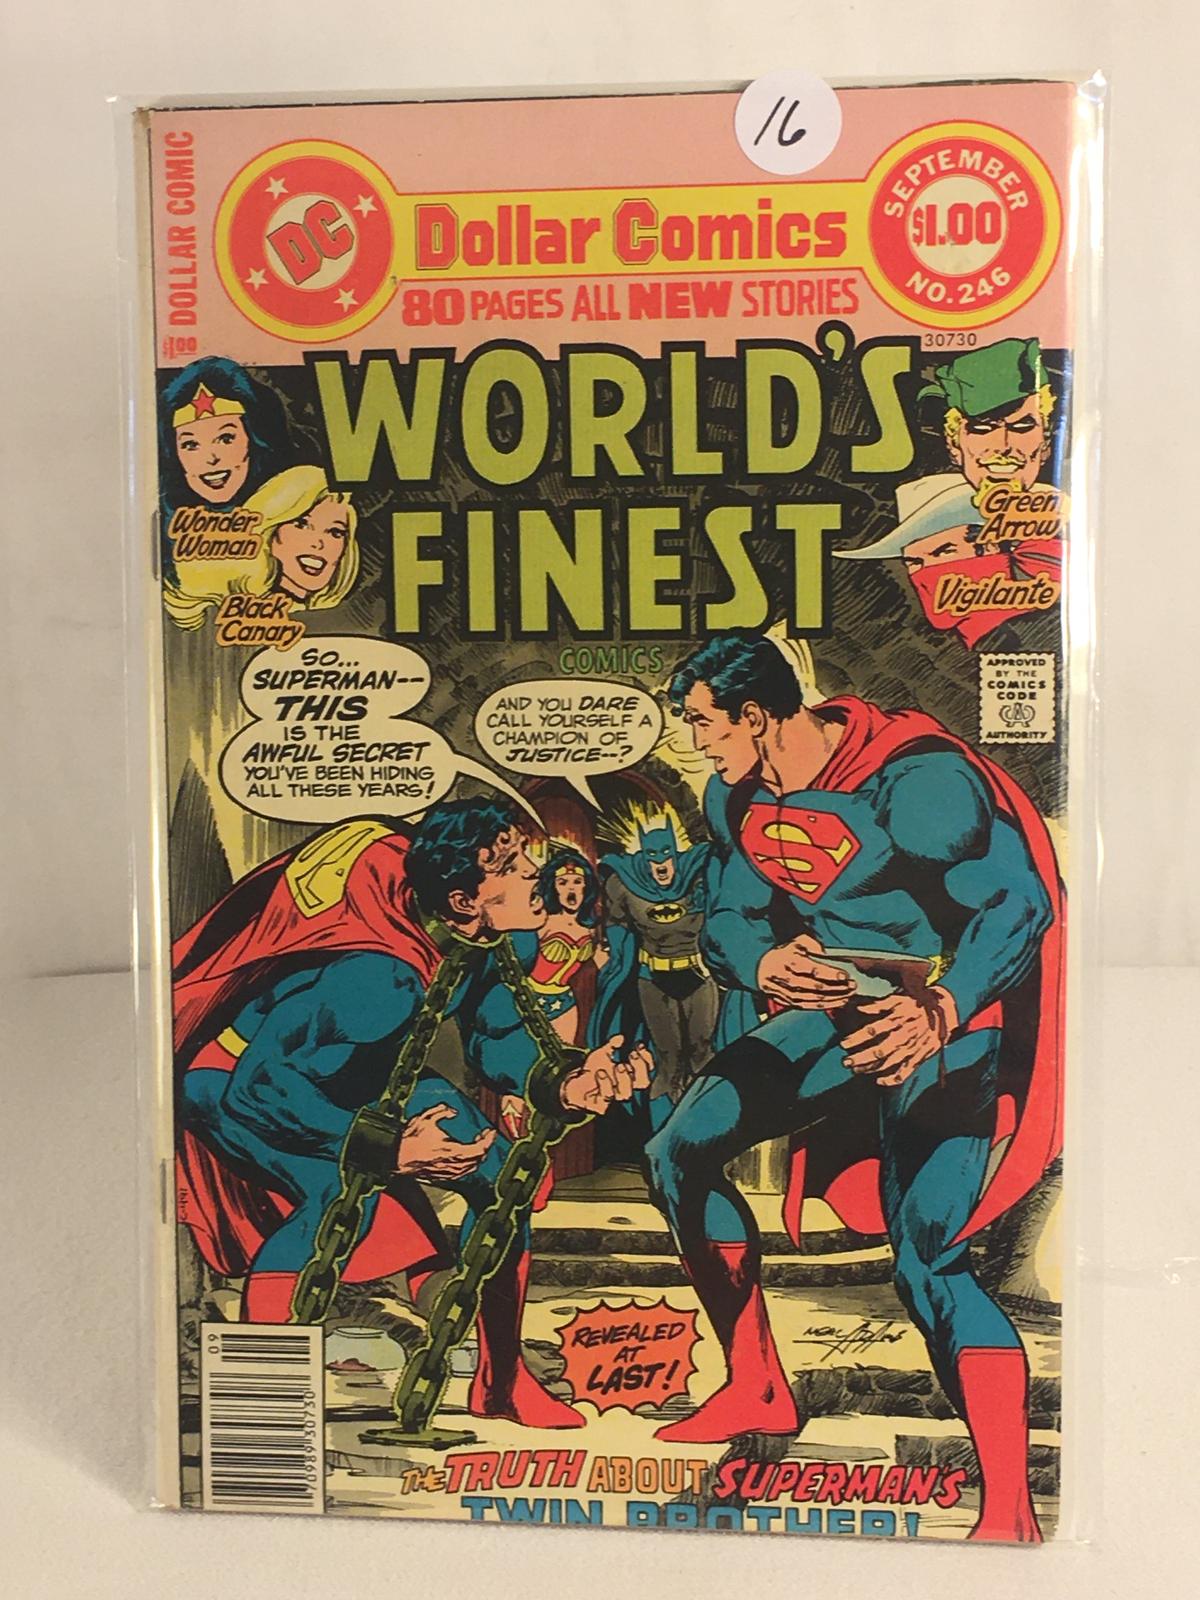 Collector Vintage DC Comics Dollar Comics World's Finest Comic Book No.246